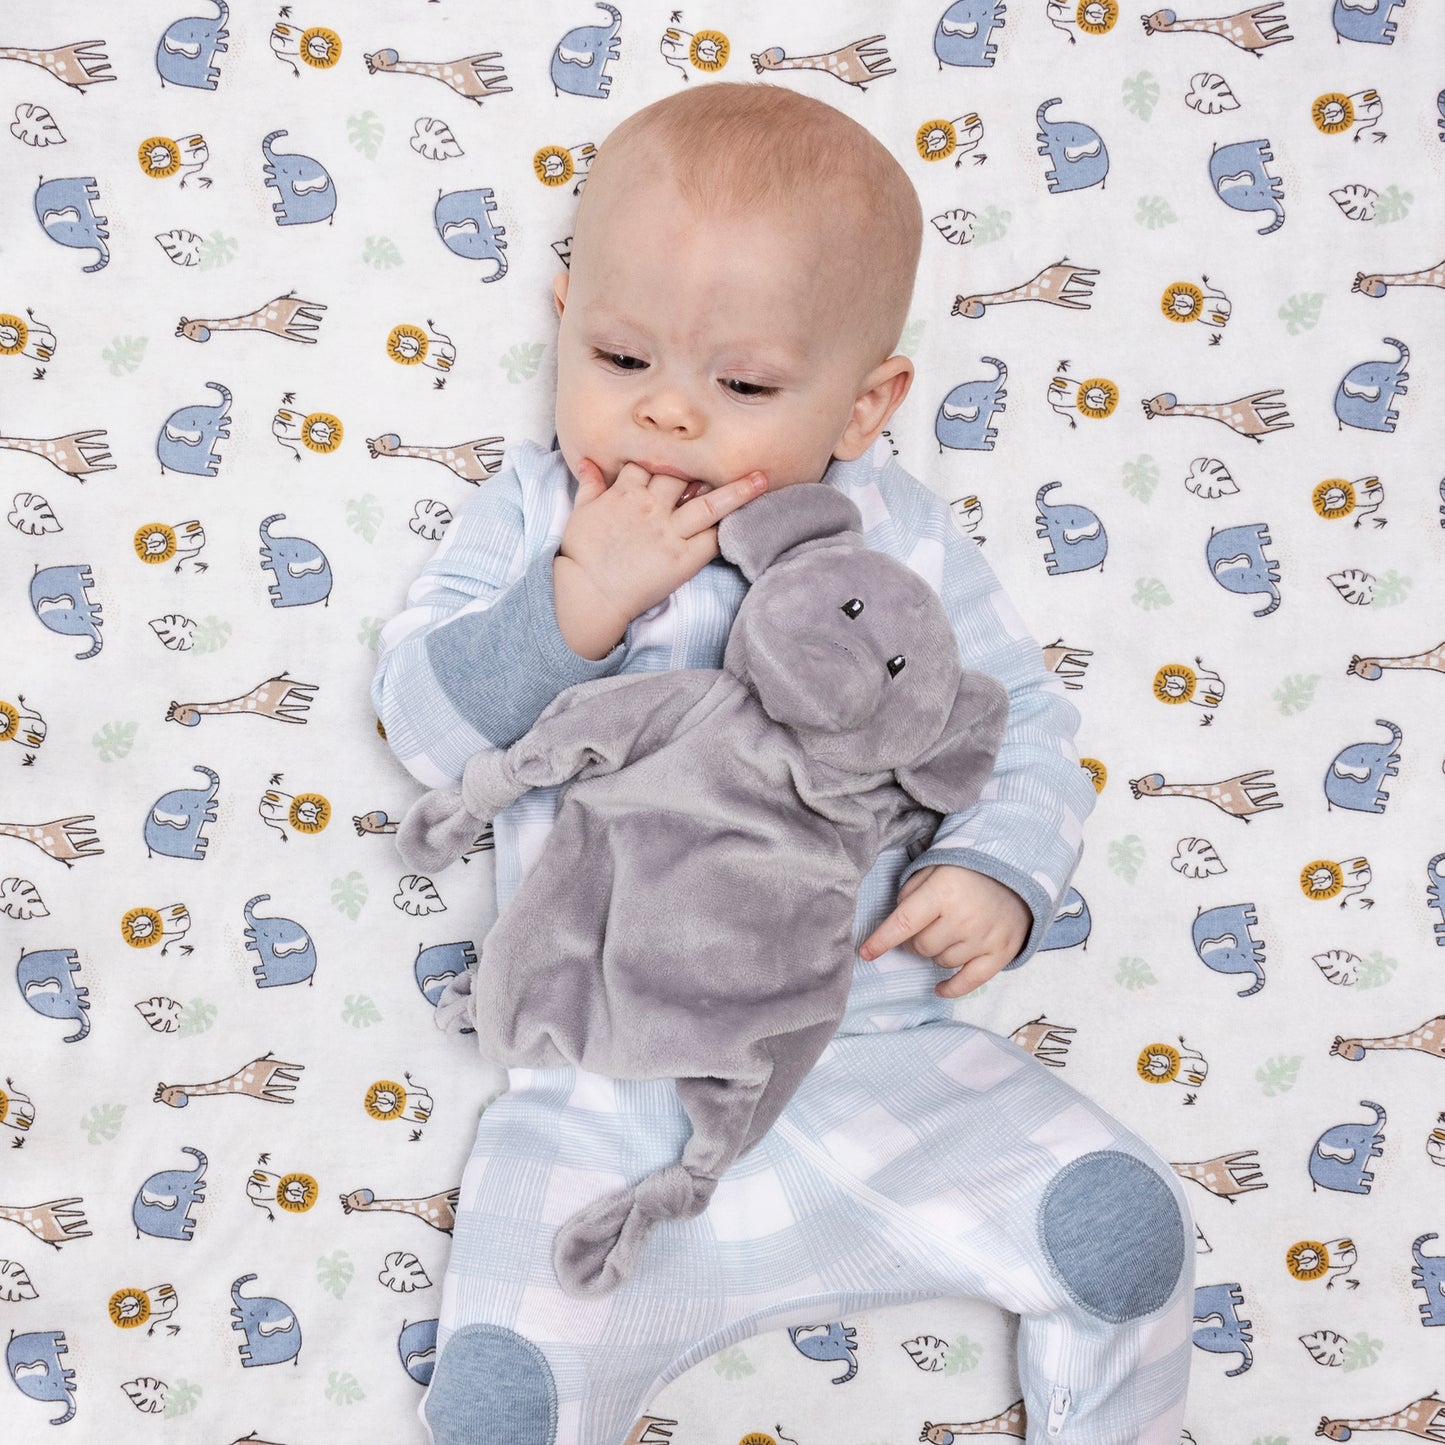  Elephant Security Blanket- stylized nursery image with baby snuggling with elephant